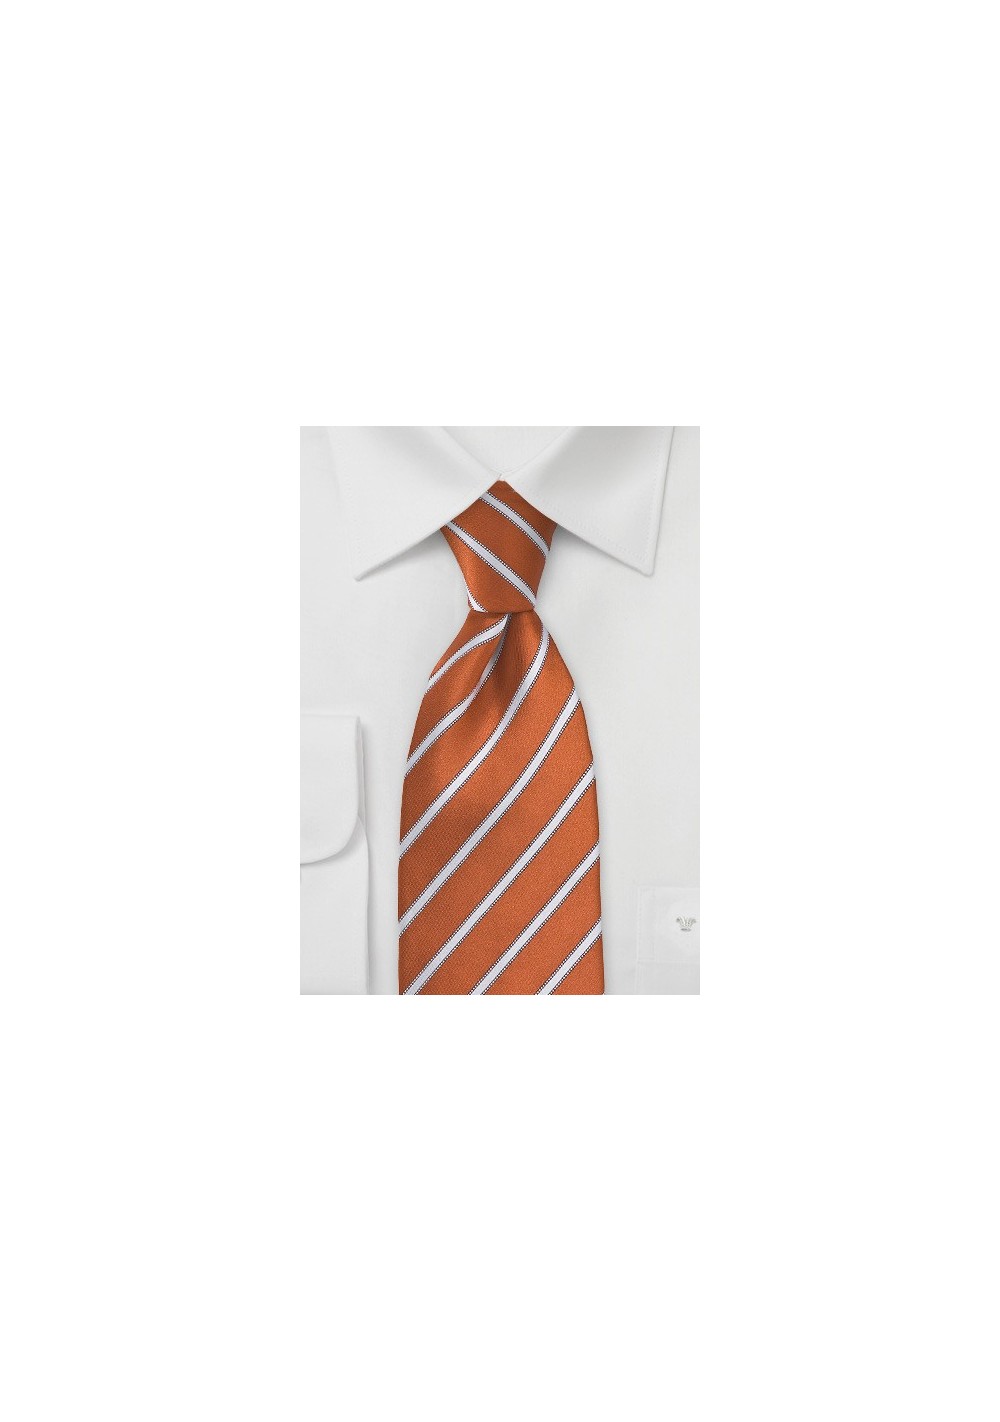 Burnt Orange and White Striped Tie